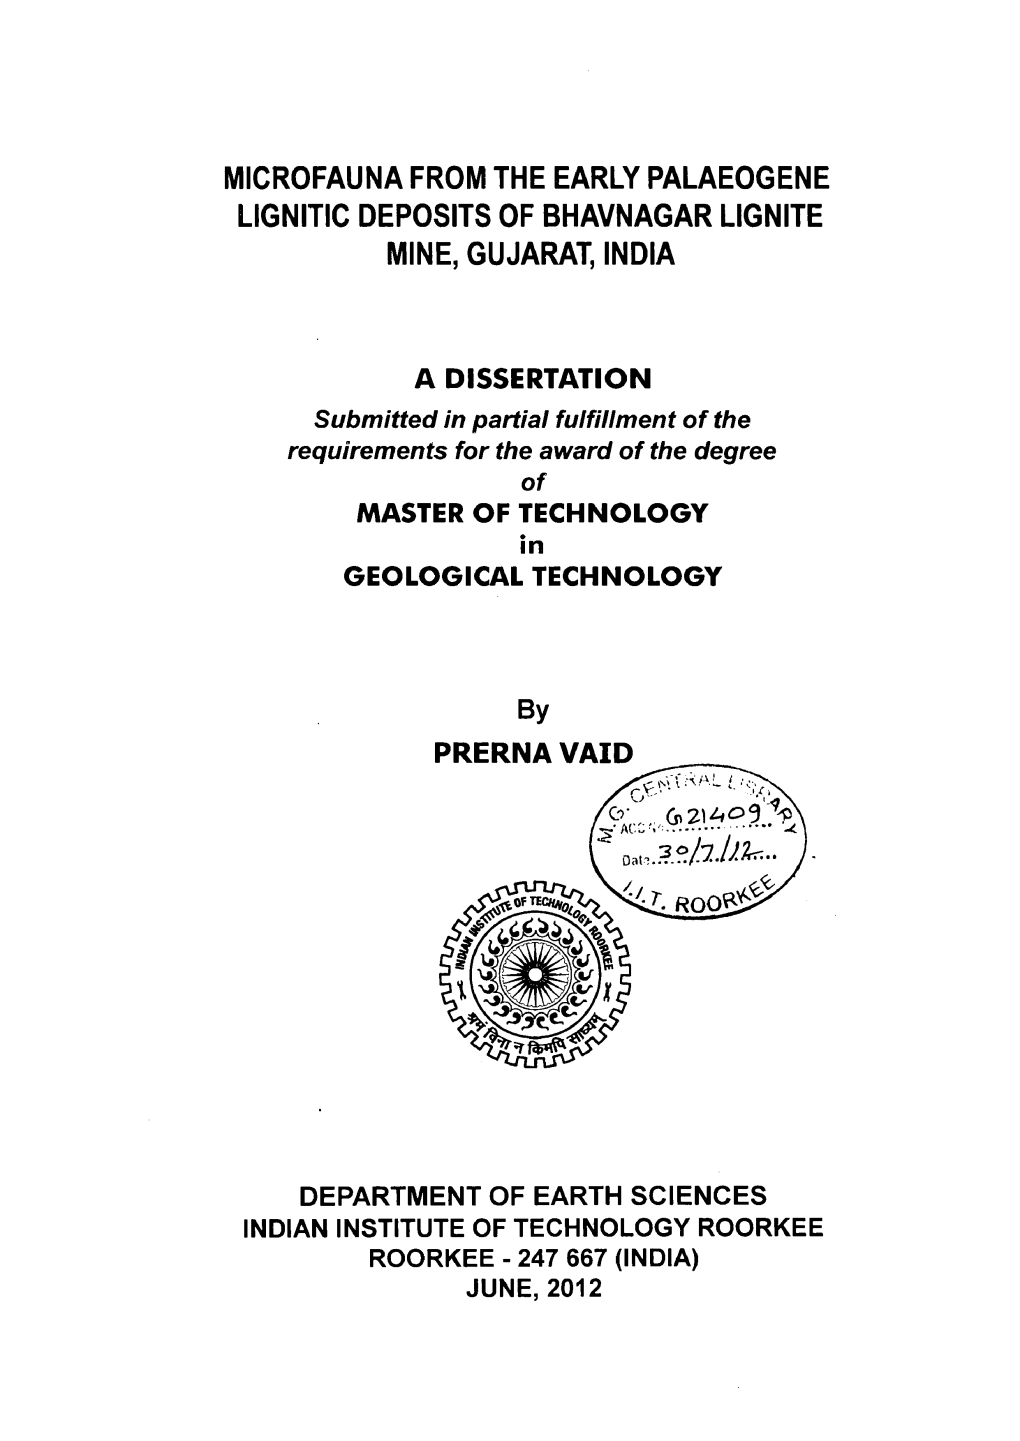 Microfauna from the Early Palaeogene Lignitic Deposits of Bhavnagar Lignite Mine, Gujarat, India